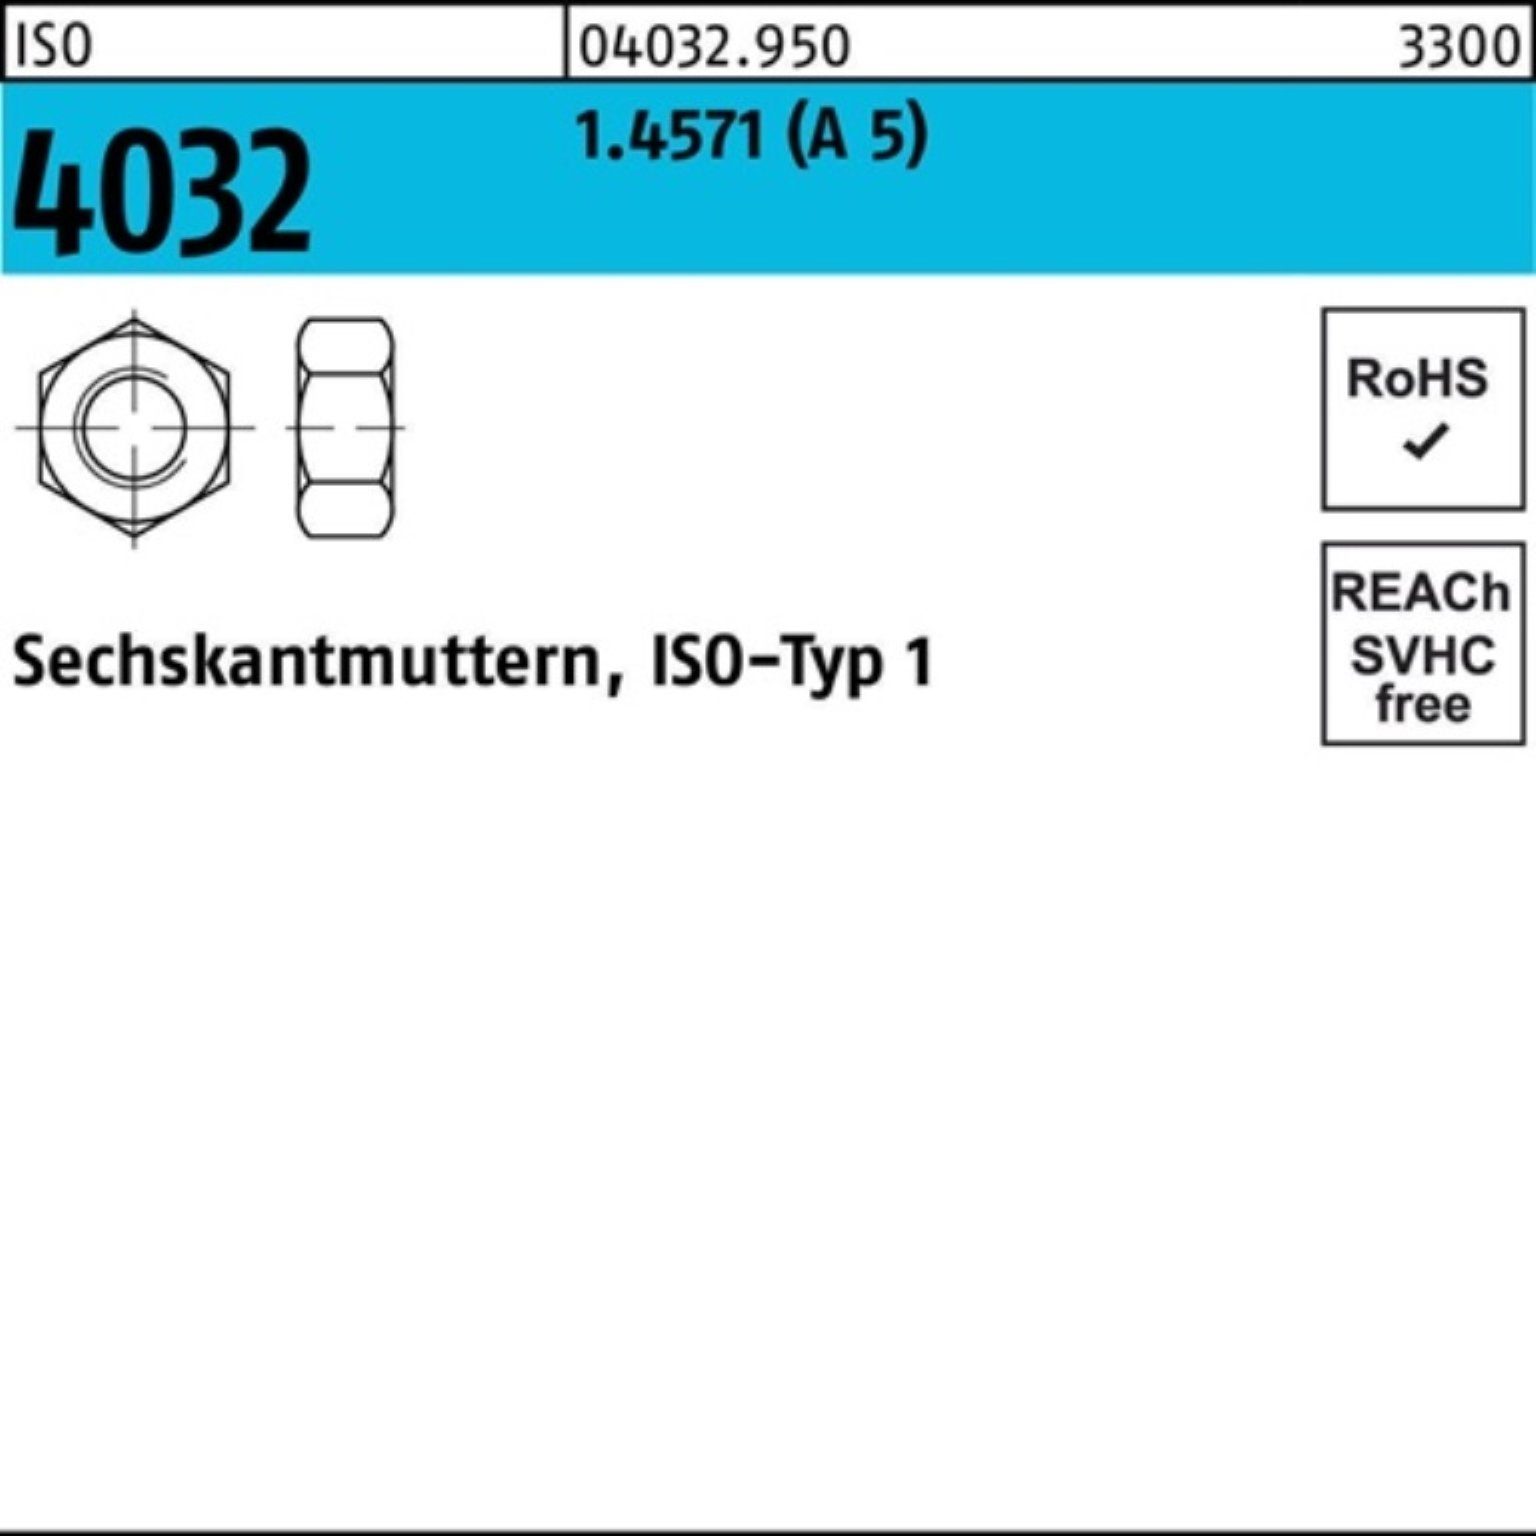 ISO Bufab ISO 5 Pack 100er 4032 4032 1.4571 50 Sechskantmutter Muttern M12 Stück A